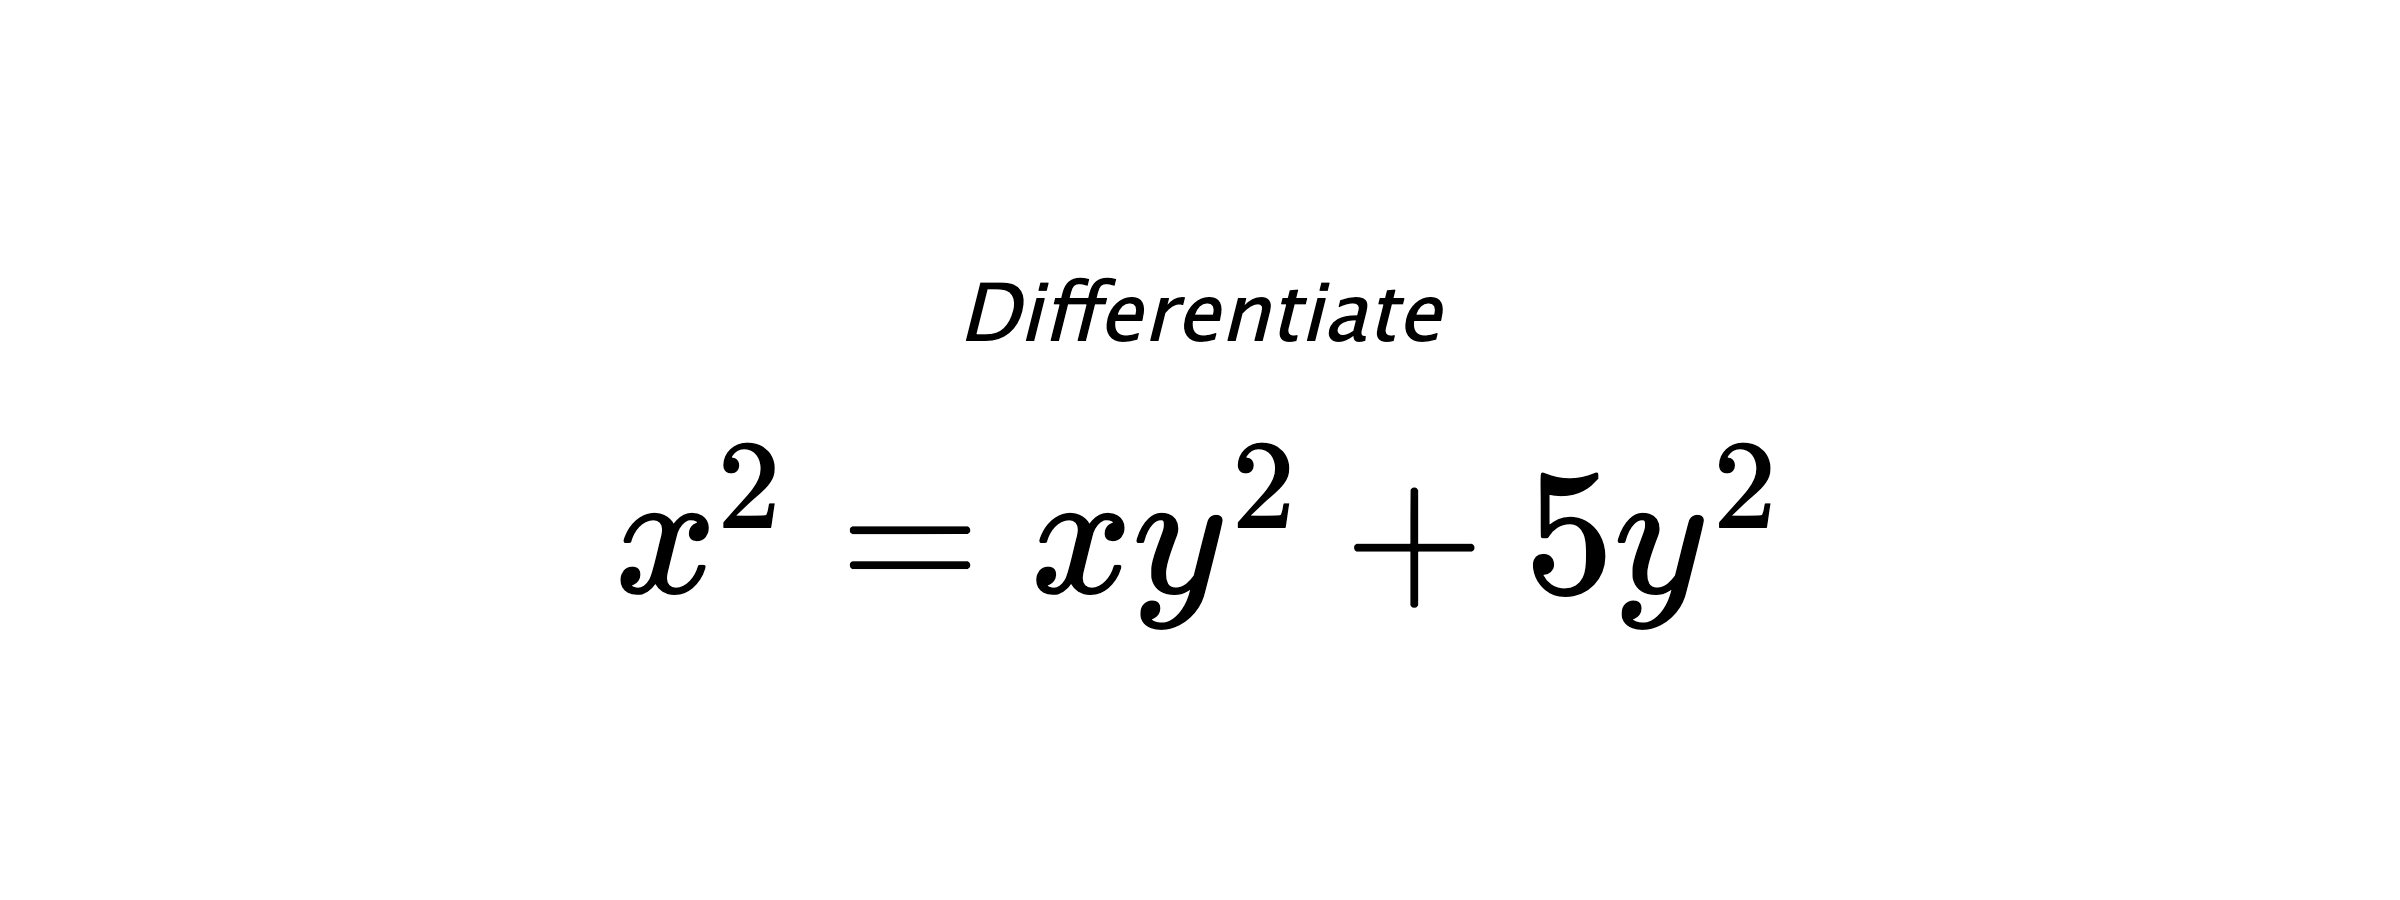 Differentiate $ x^2 = xy^2 + 5y^2 $